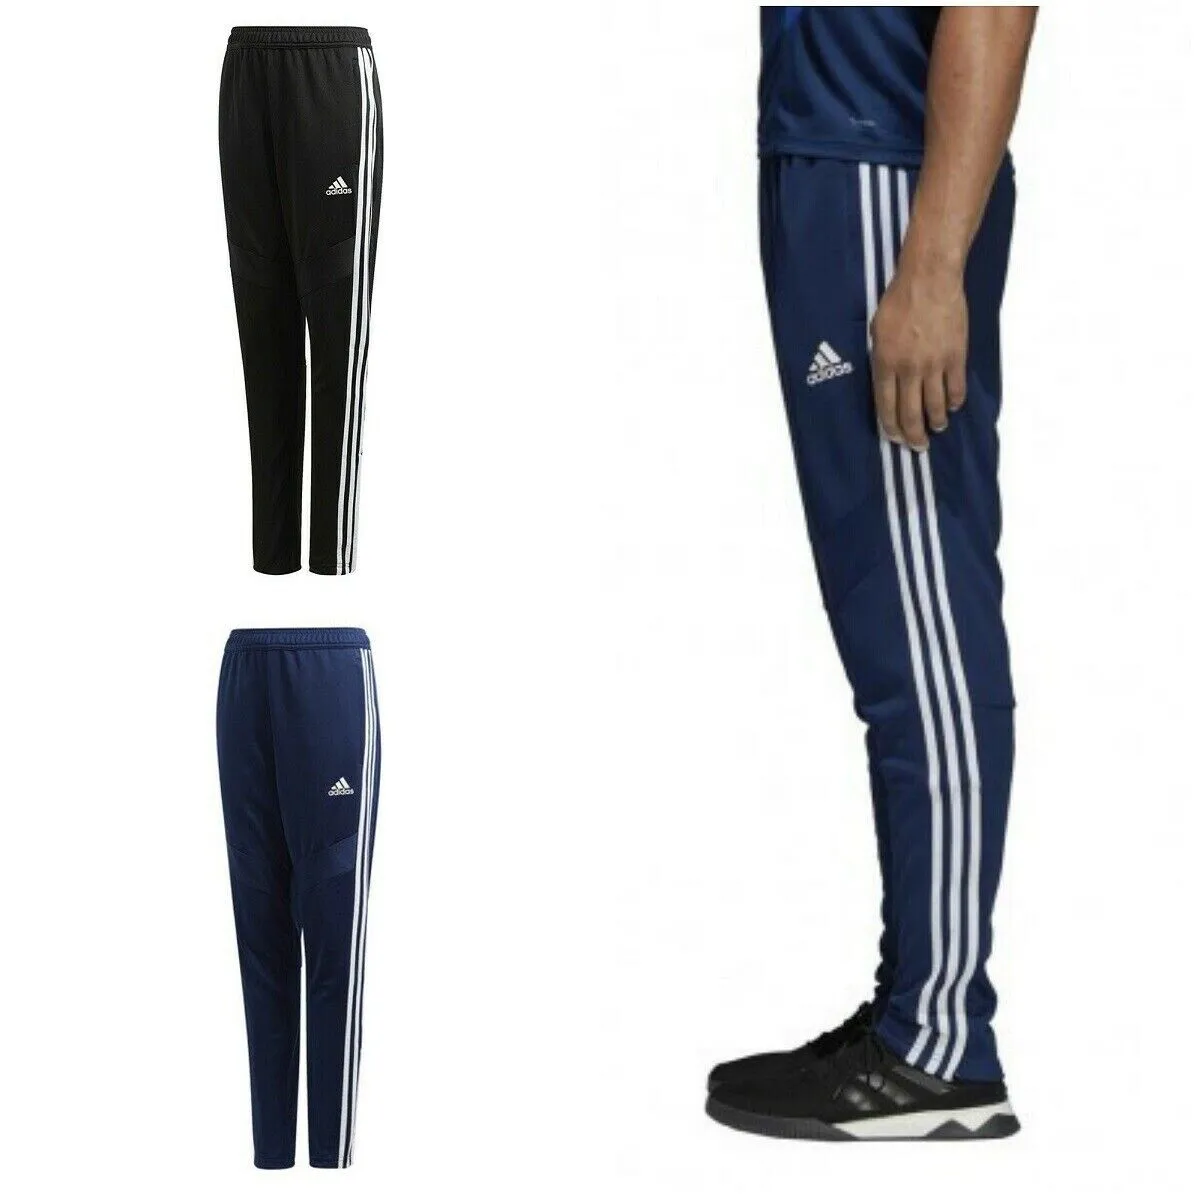 Adidas New Junior Boys Tiro Pants Bottom Tapered Football Fit Black Navy | eBay